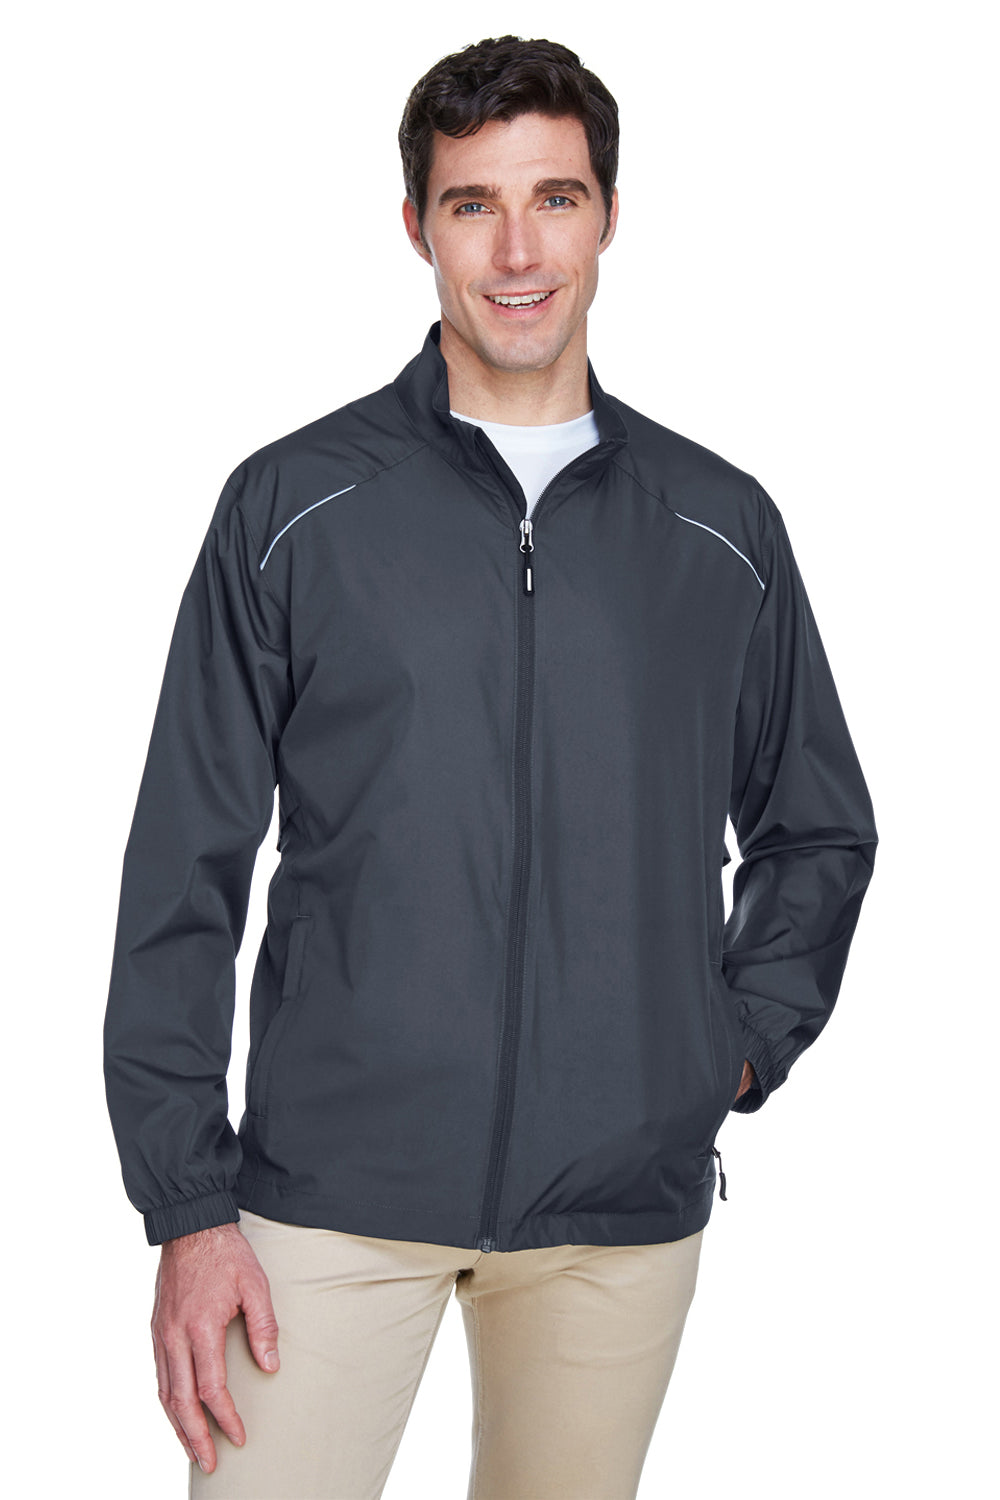 Core 365 88183 Mens Motivate Water Resistant Full Zip Jacket Carbon Grey Front